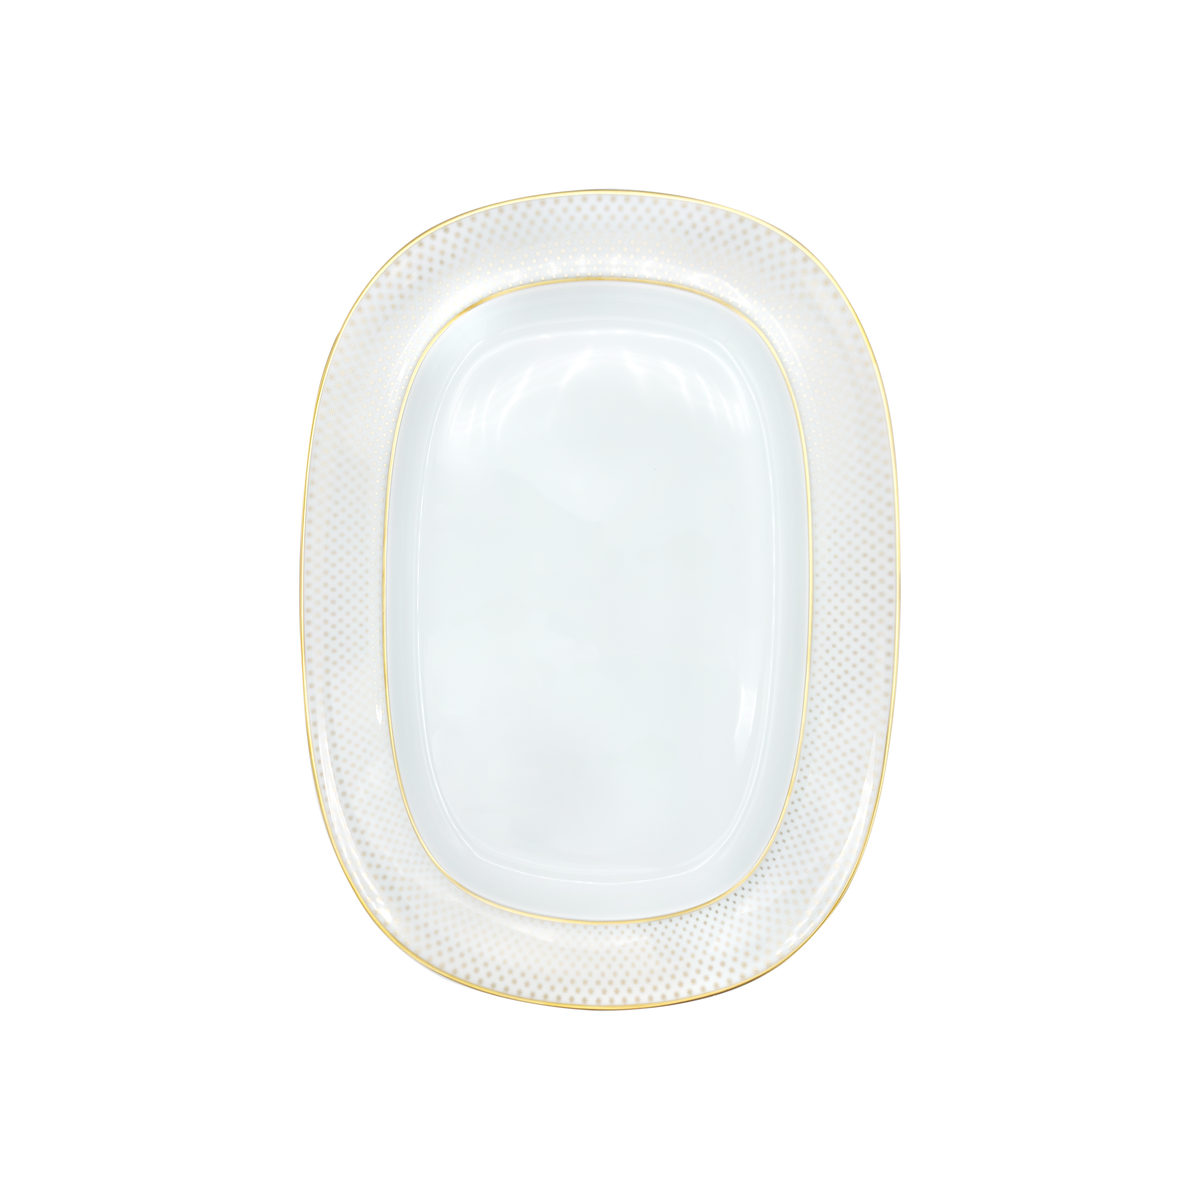 Rosace - Oval platter, large